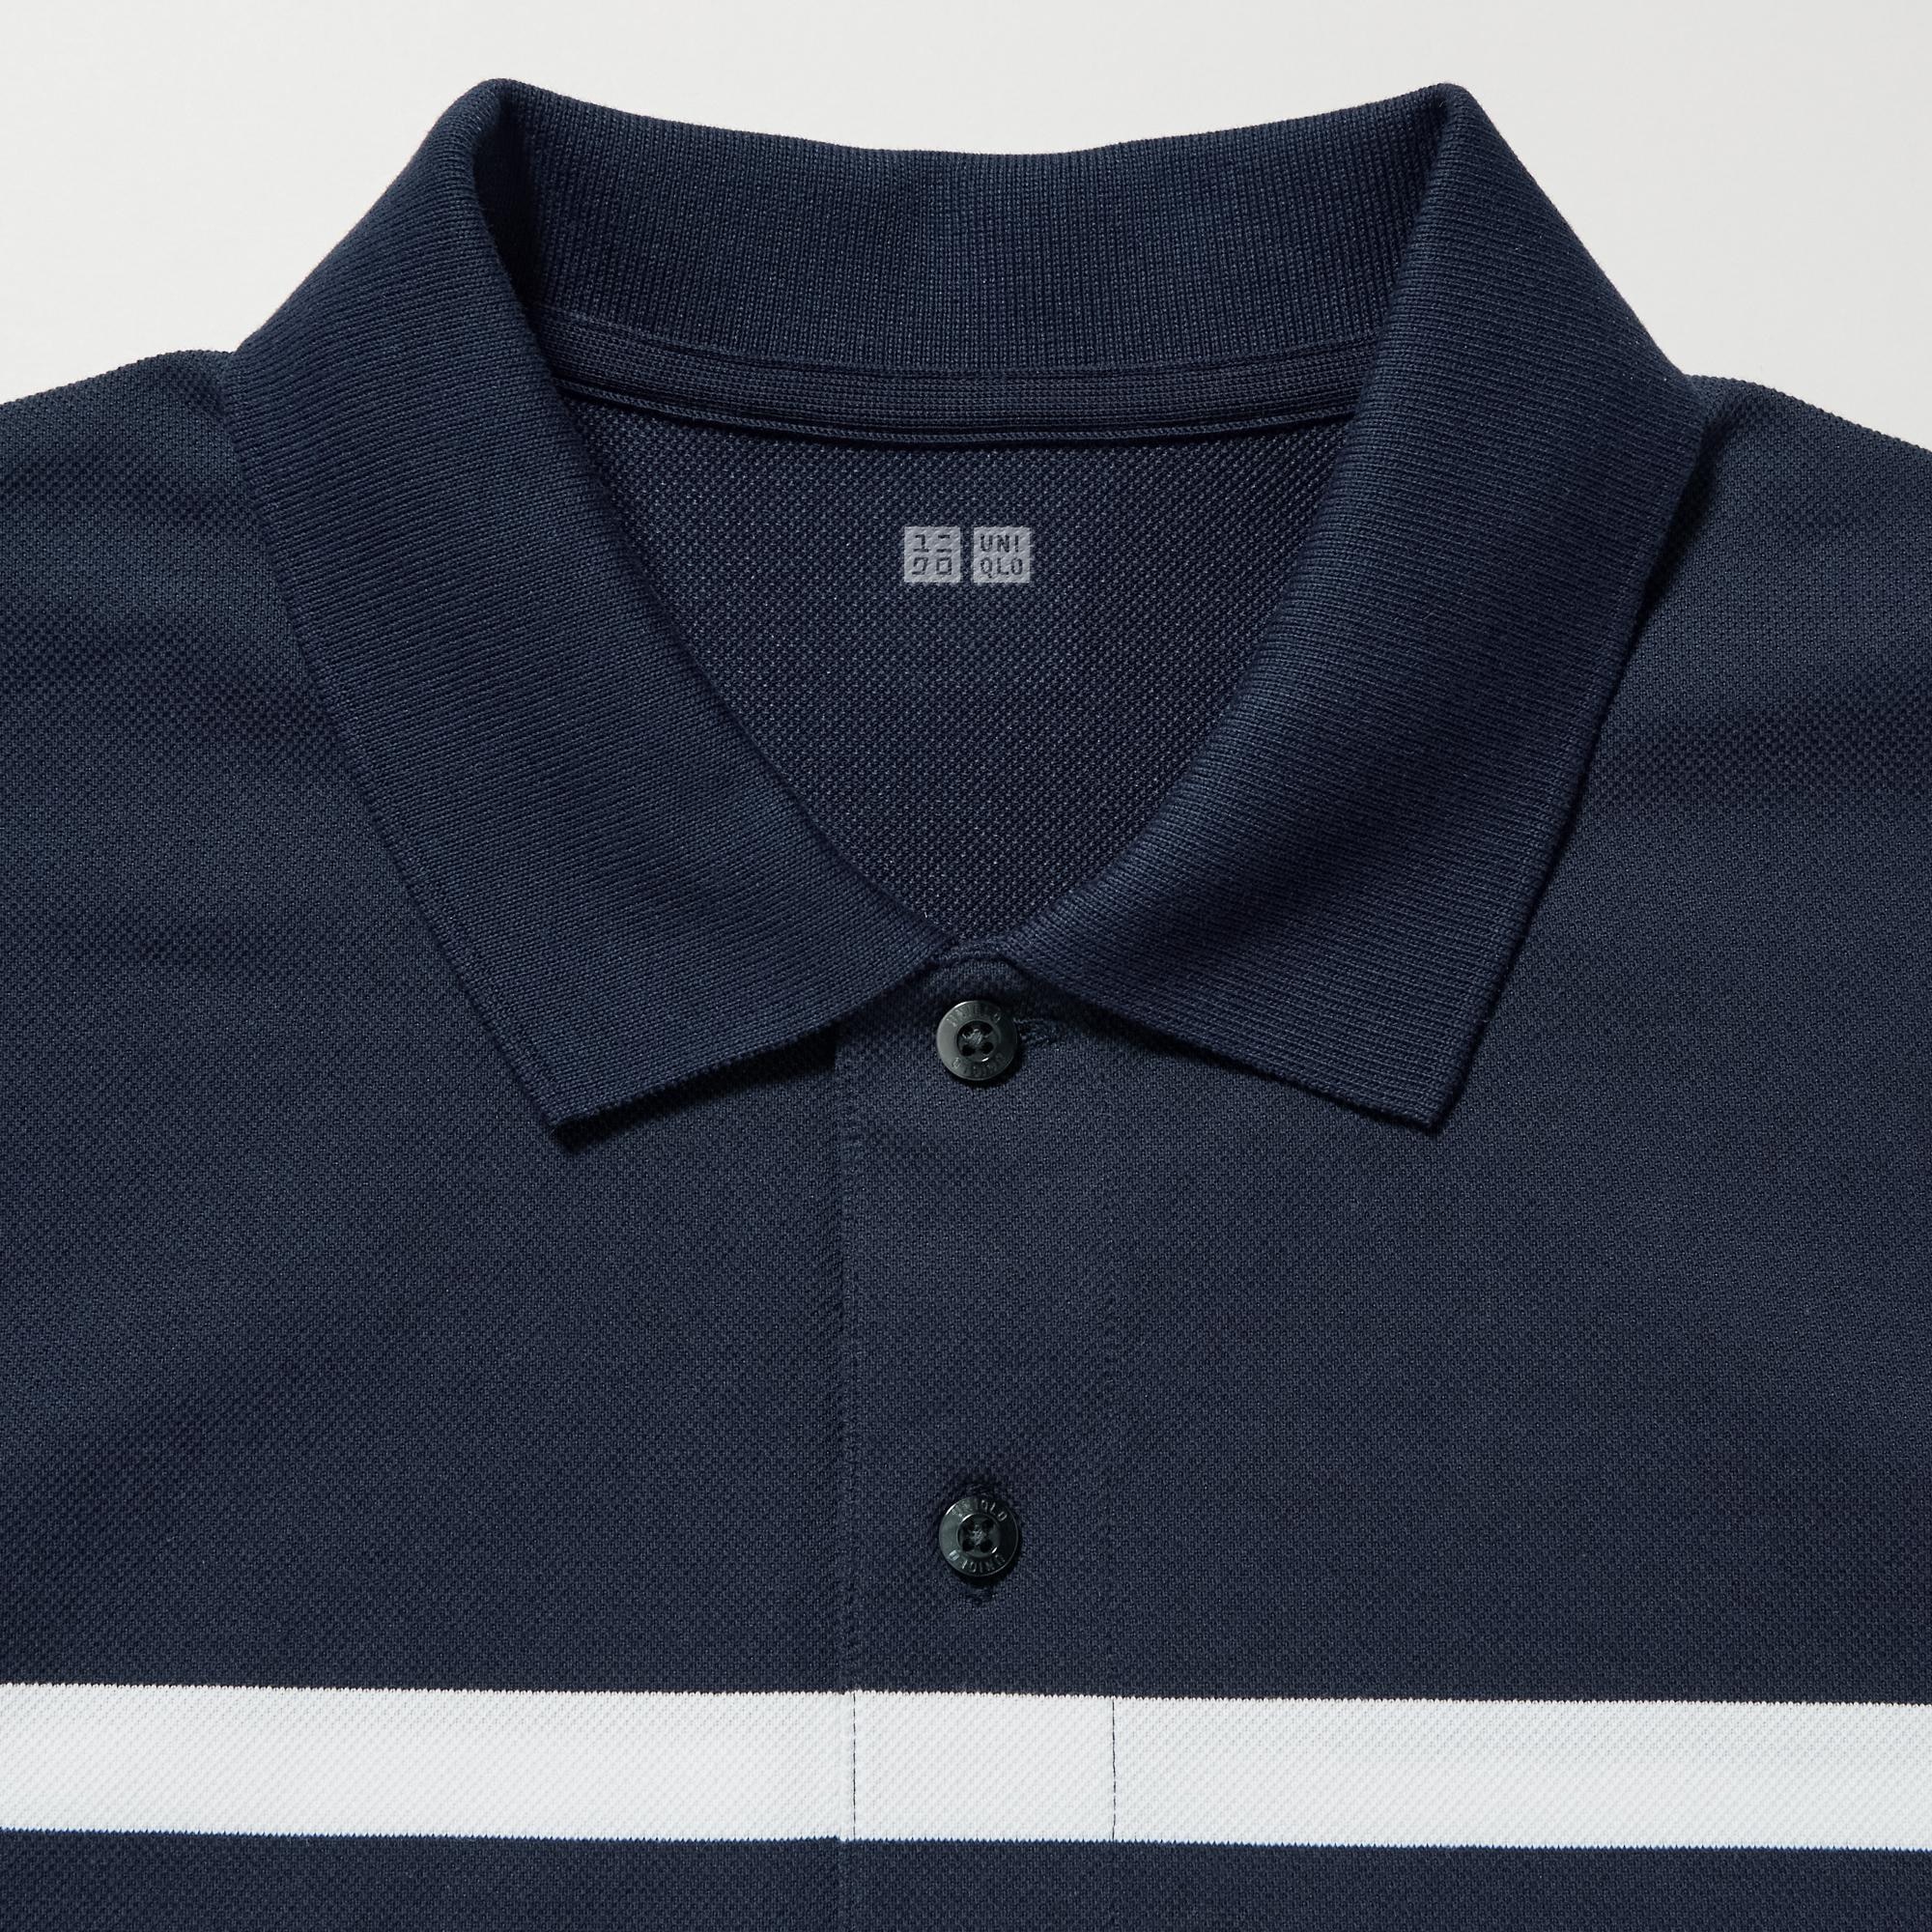 Dry Pique Short-Sleeve Polo Shirt (Panel)